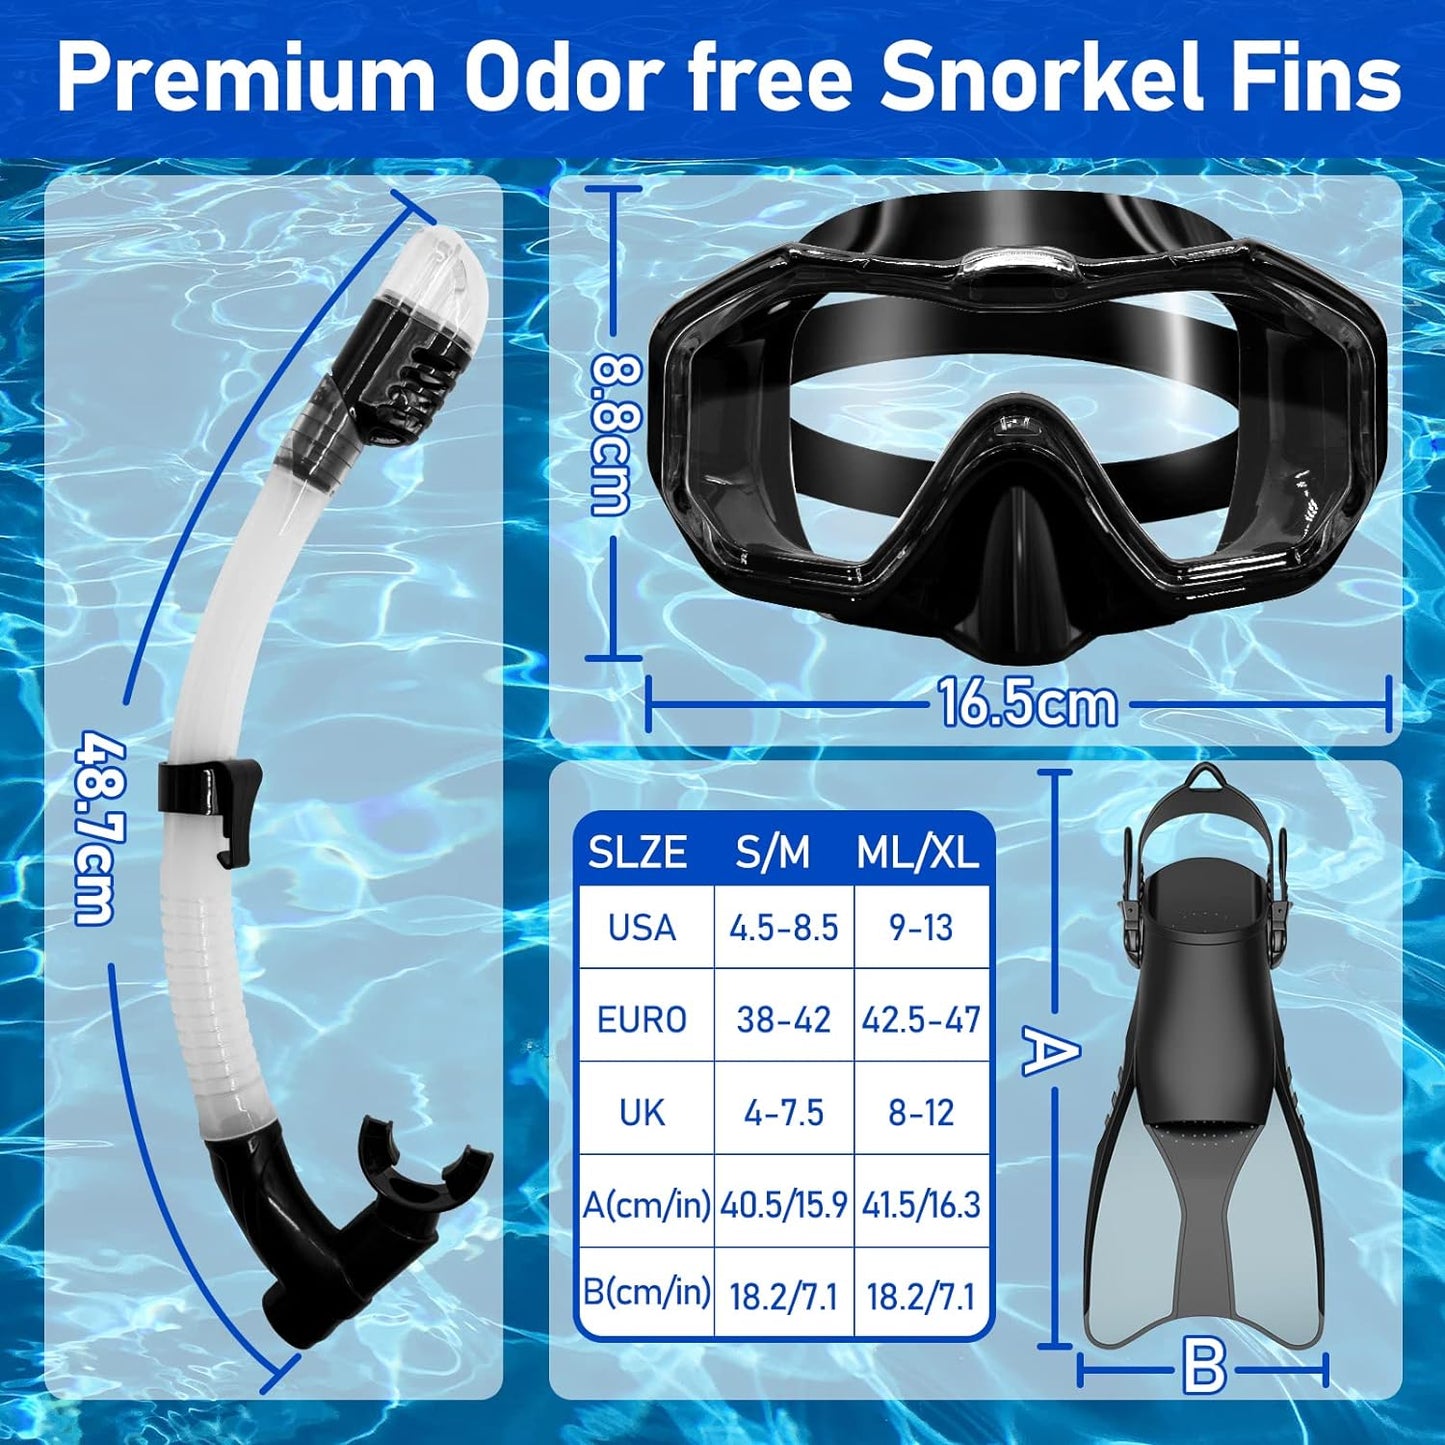 Snorkeling Gear,3 in 1 Mask Fins,180 View, Anti-Fog Anti-Leak, Dry Top Snorkel, Dive Flippers